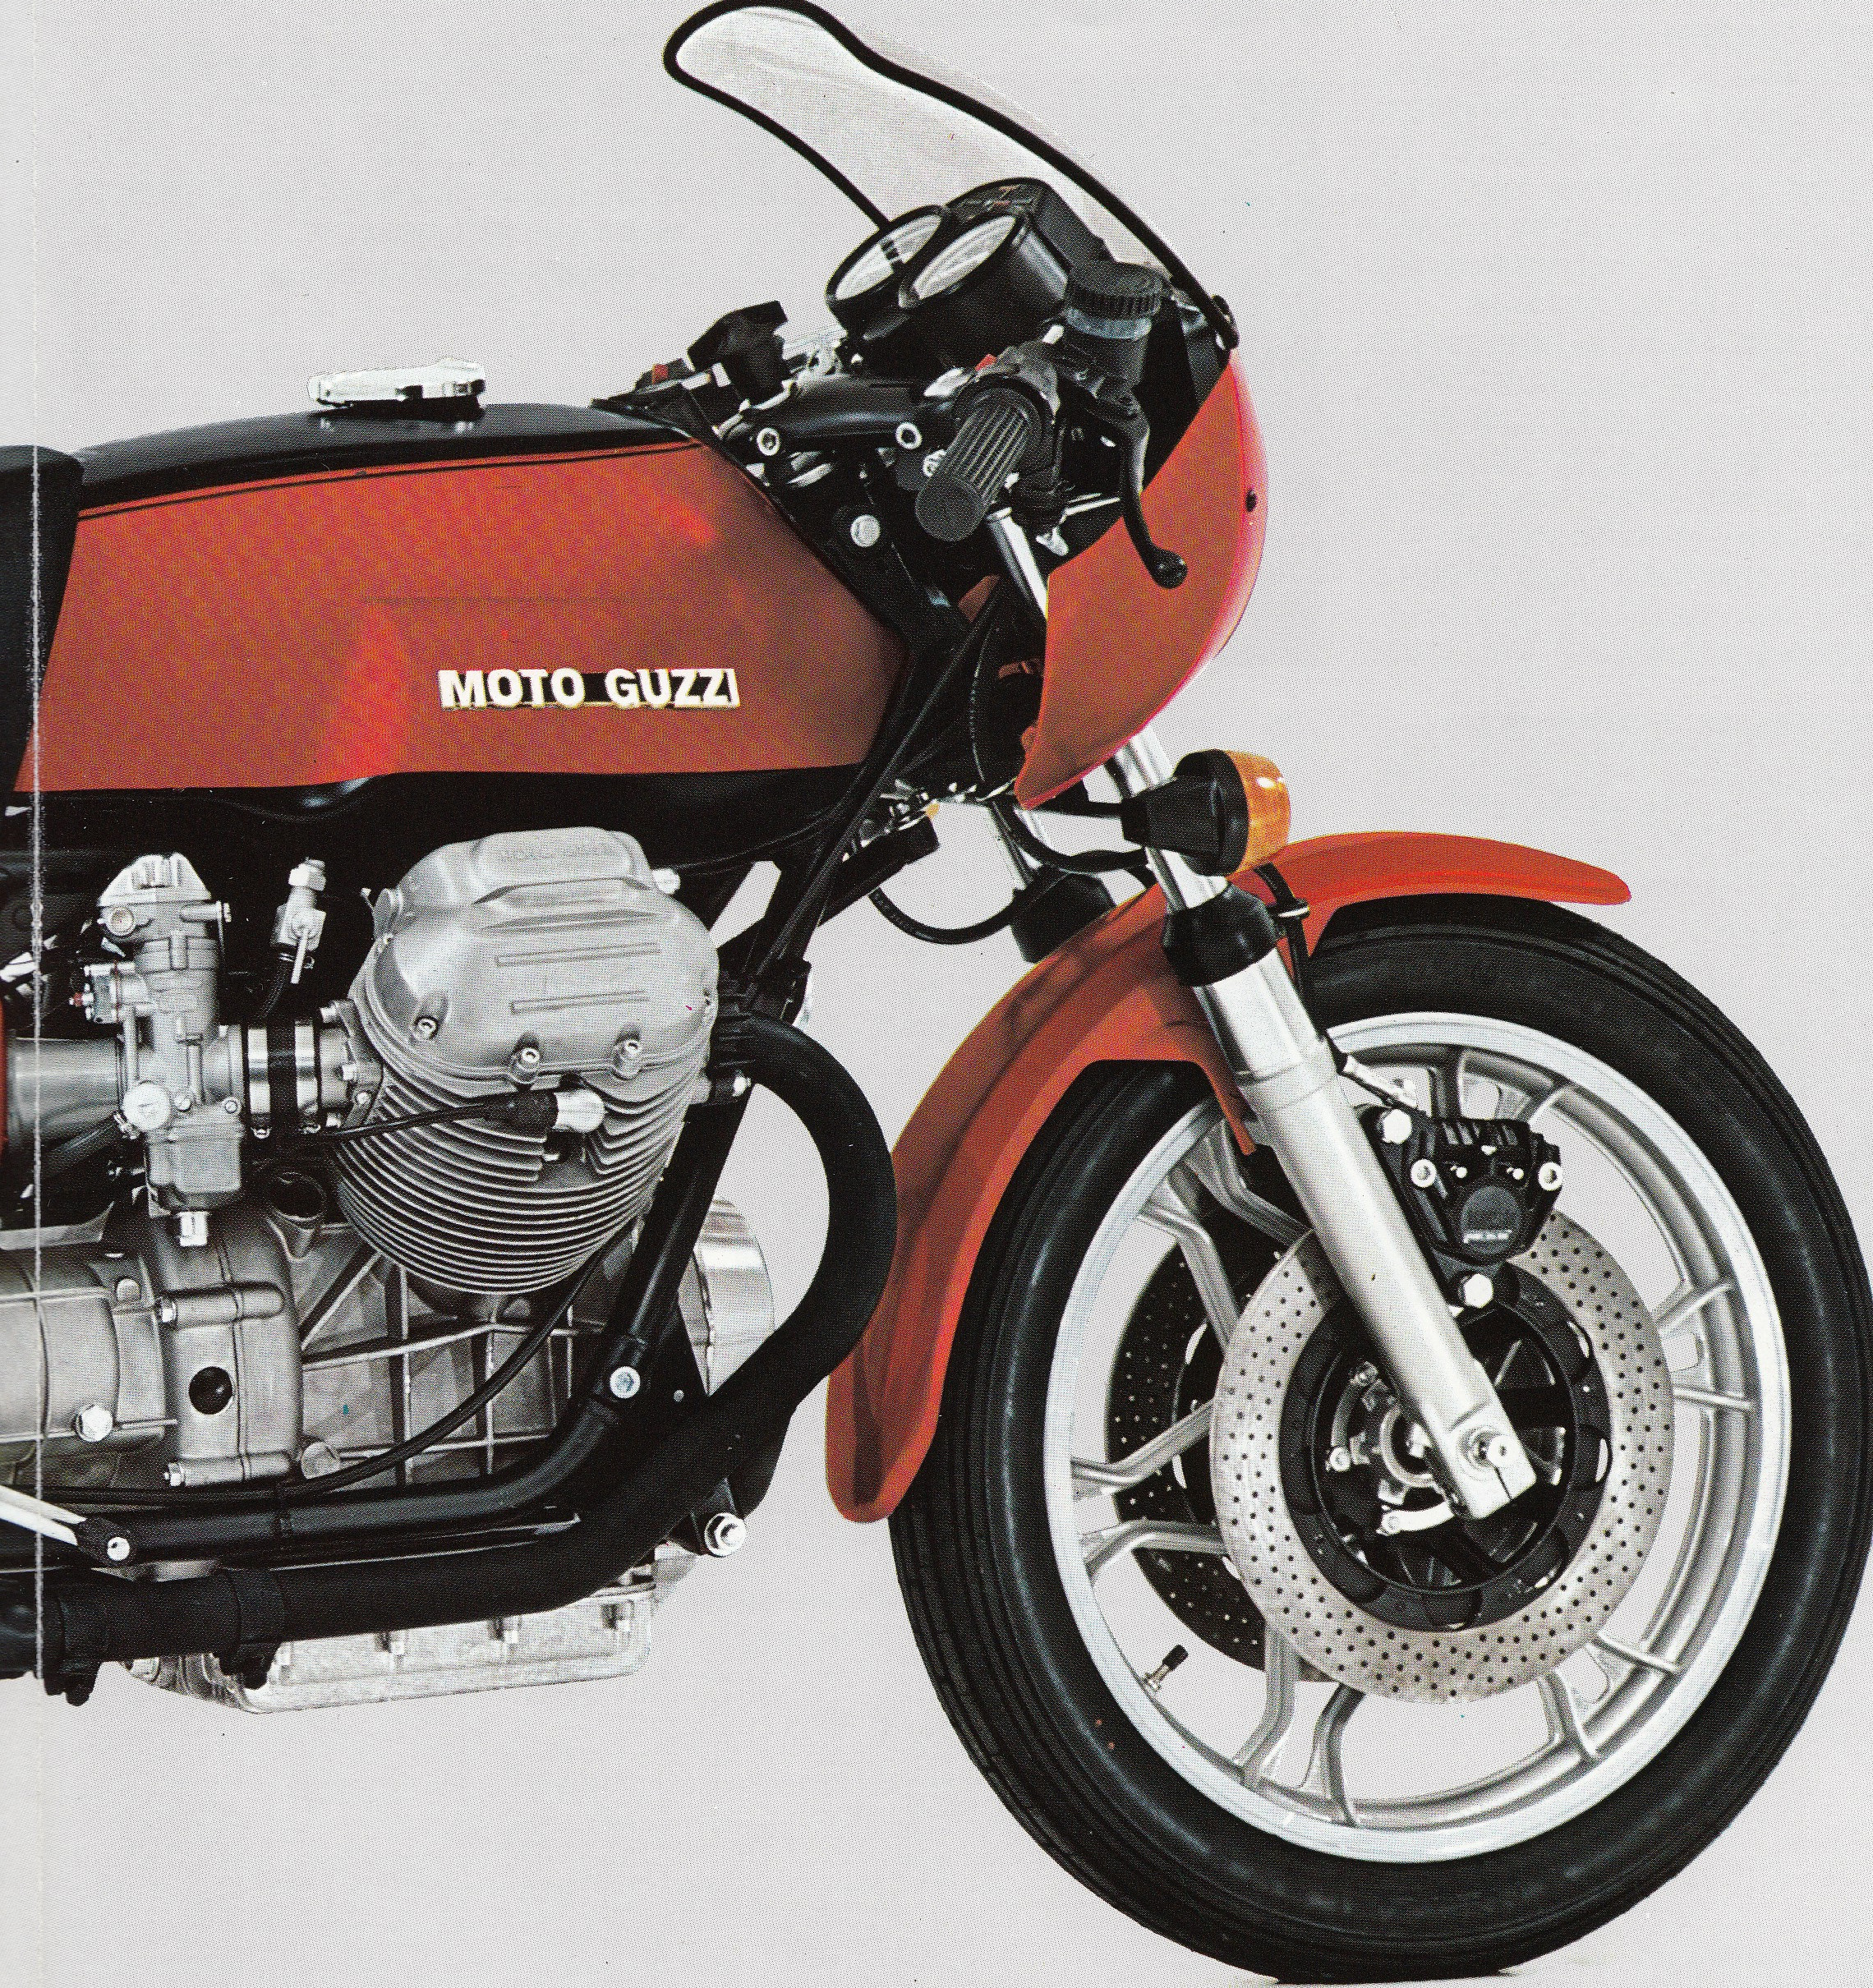 Moto Guzzi factory brochure: 850 Le Mans (red)